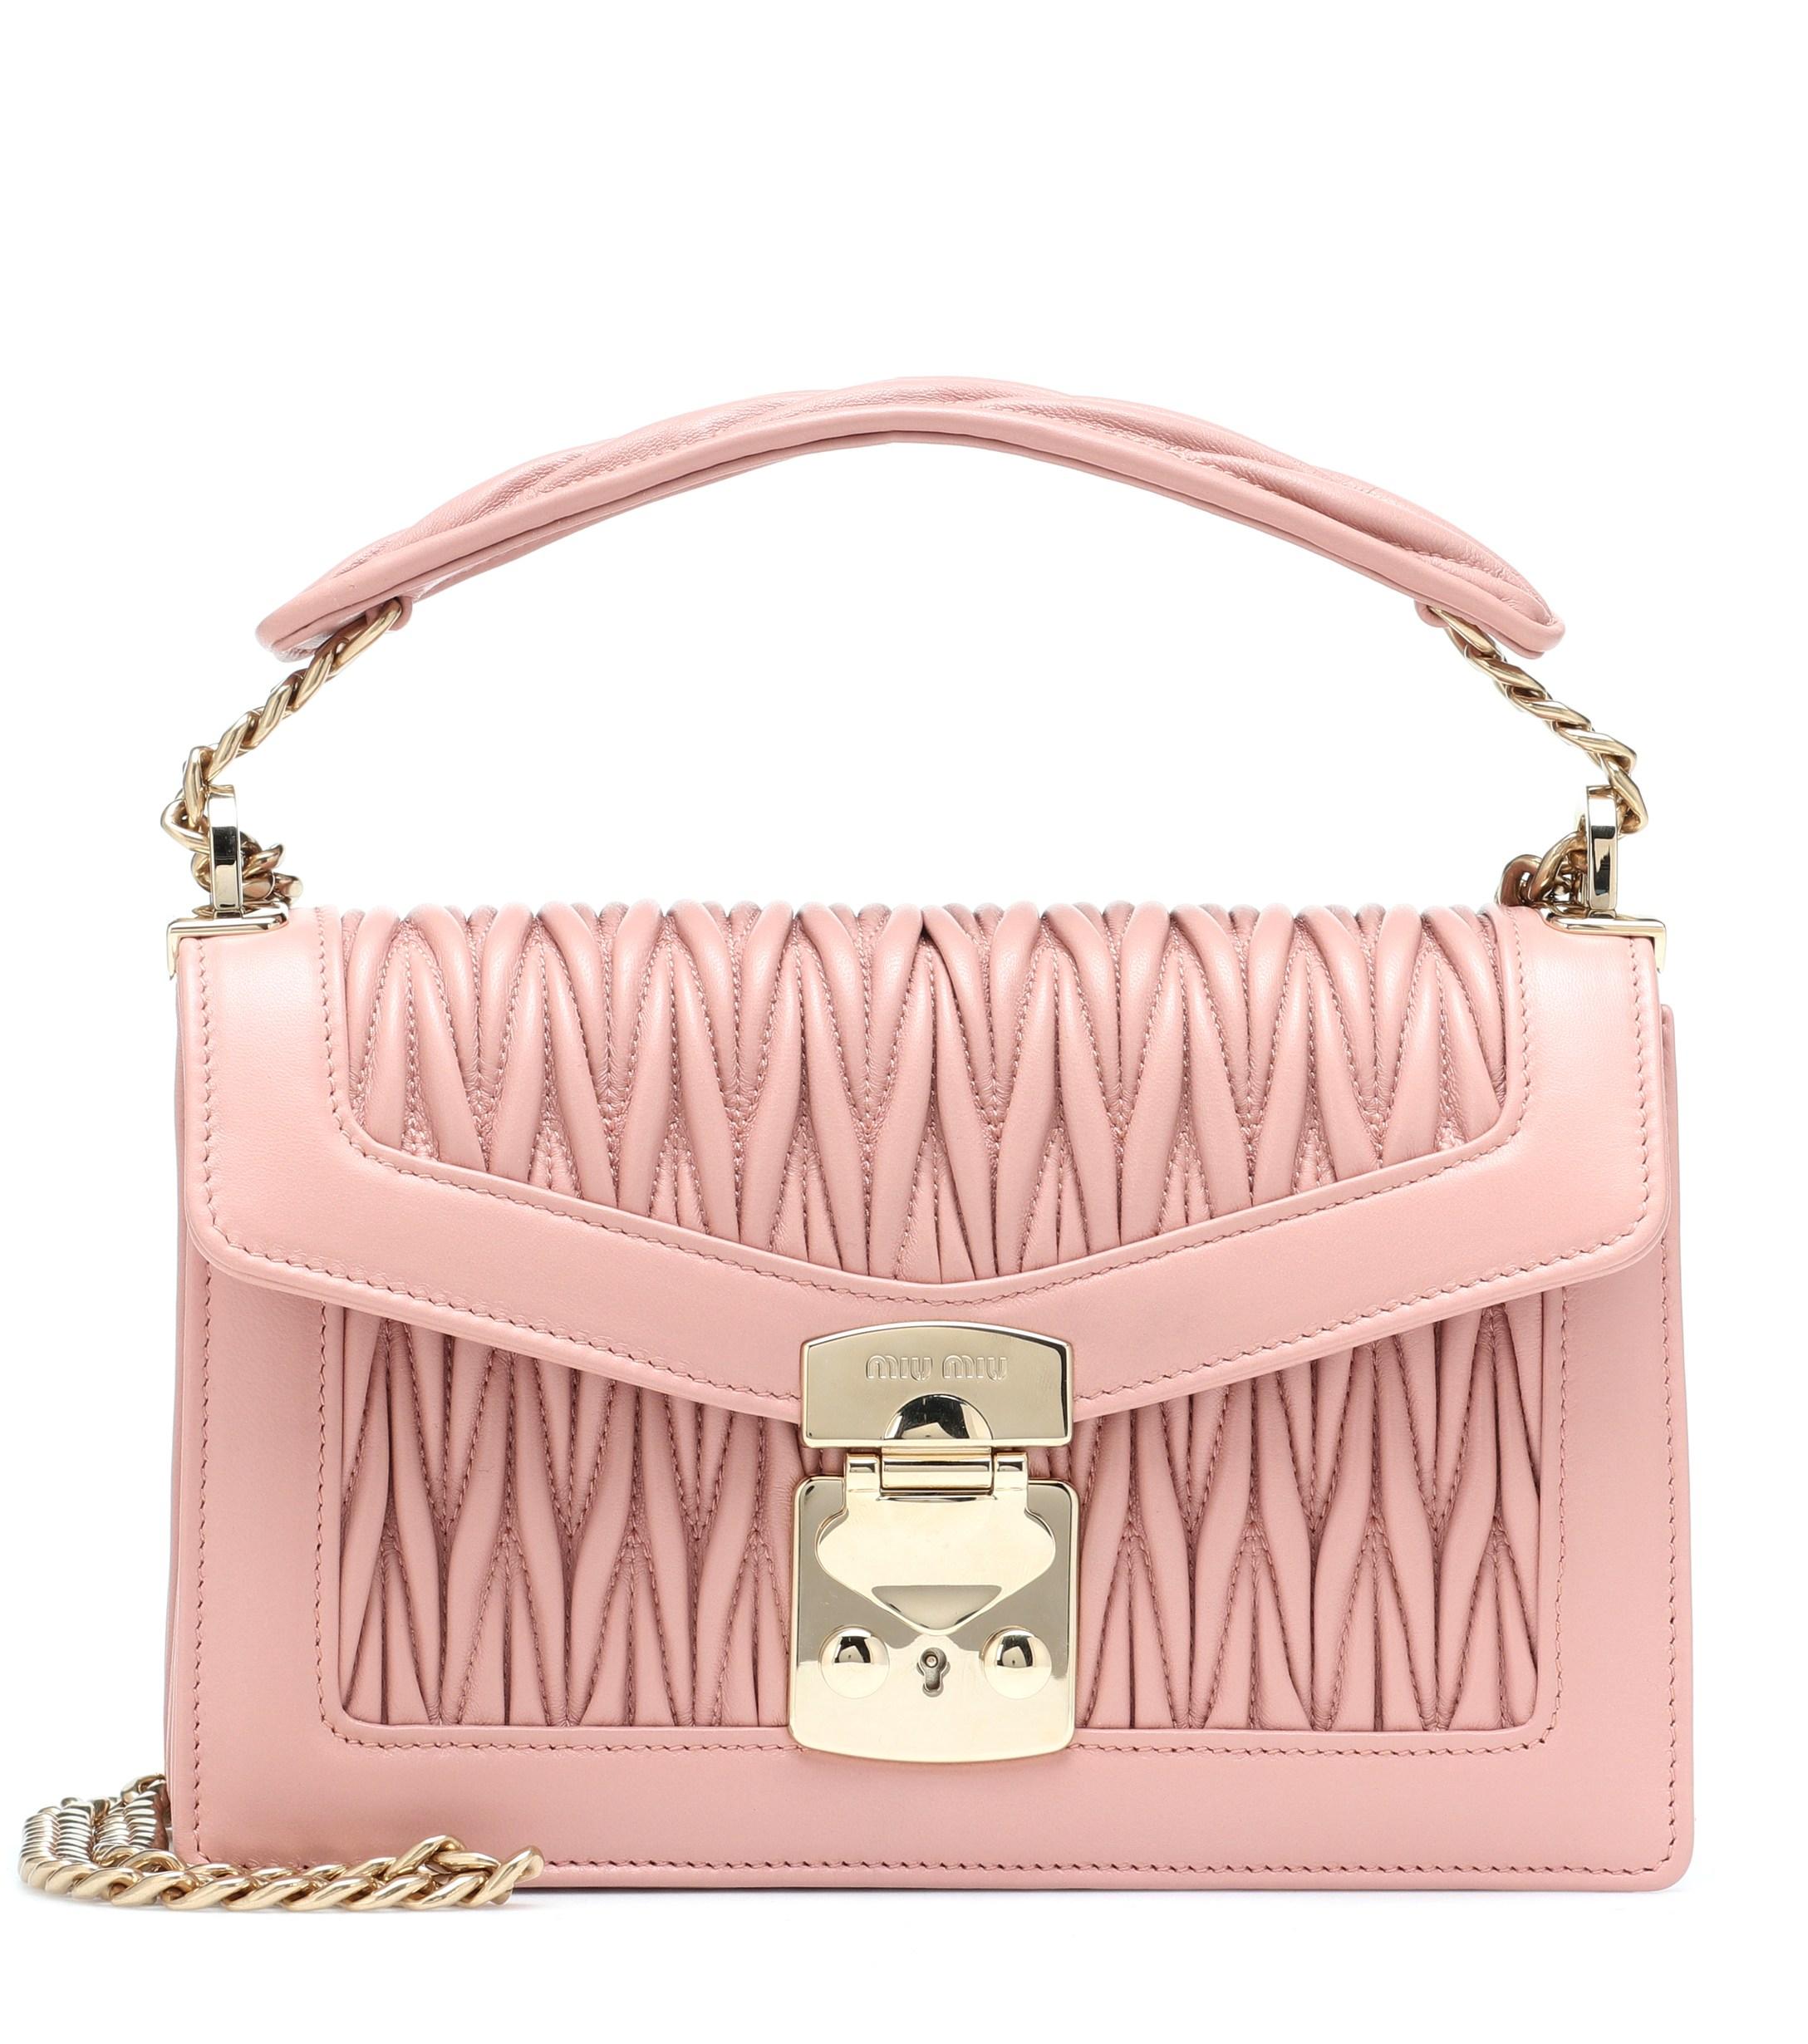 Miu Miu Confidential Leather Shoulder Bag in Pink - Lyst